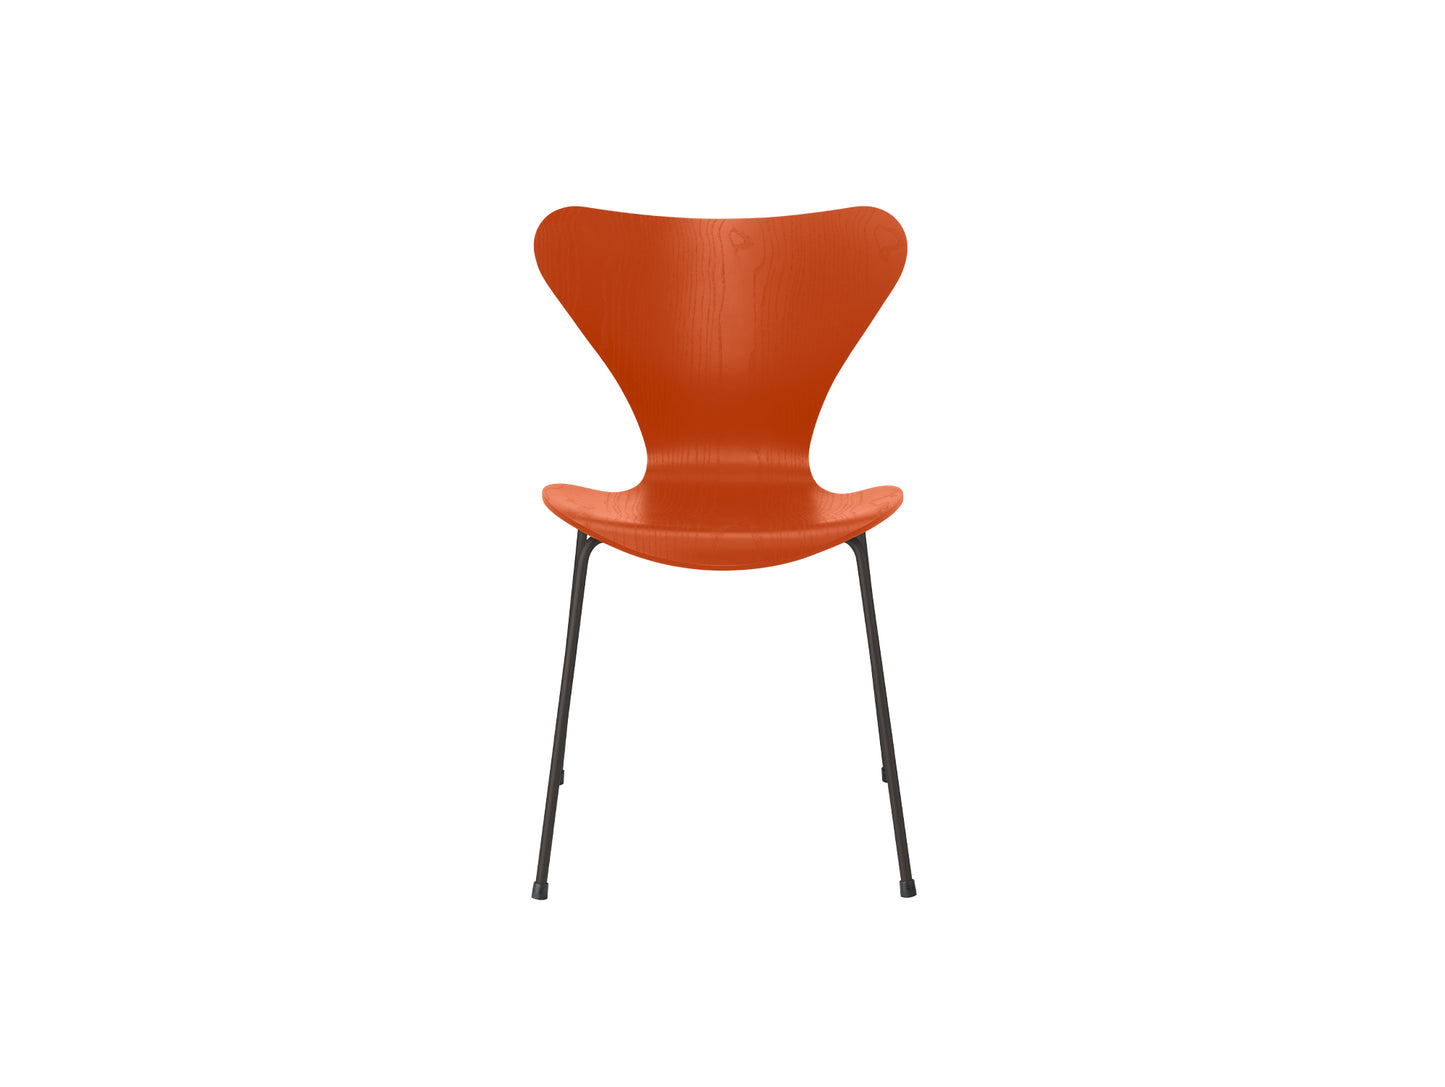 Series 7™ 3107 Dining Chair by Fritz Hansen - Paradise Orange Coloured Ash Veneer Shell / Warm Graphite Steel